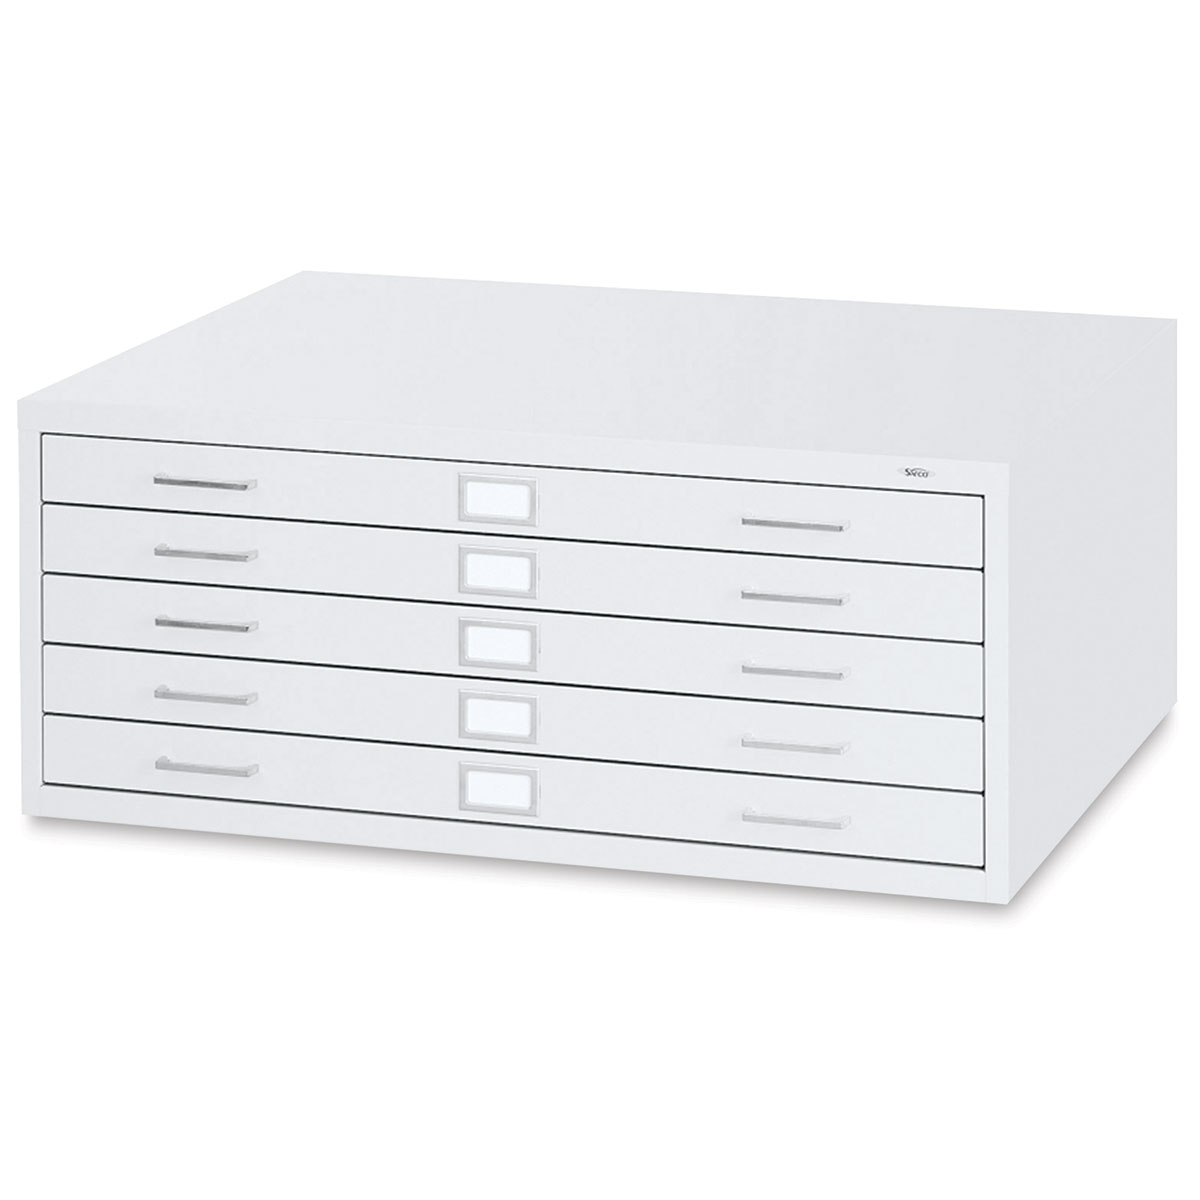 Safco 5-Drawer Steel File - White, Flat File Unit, Large